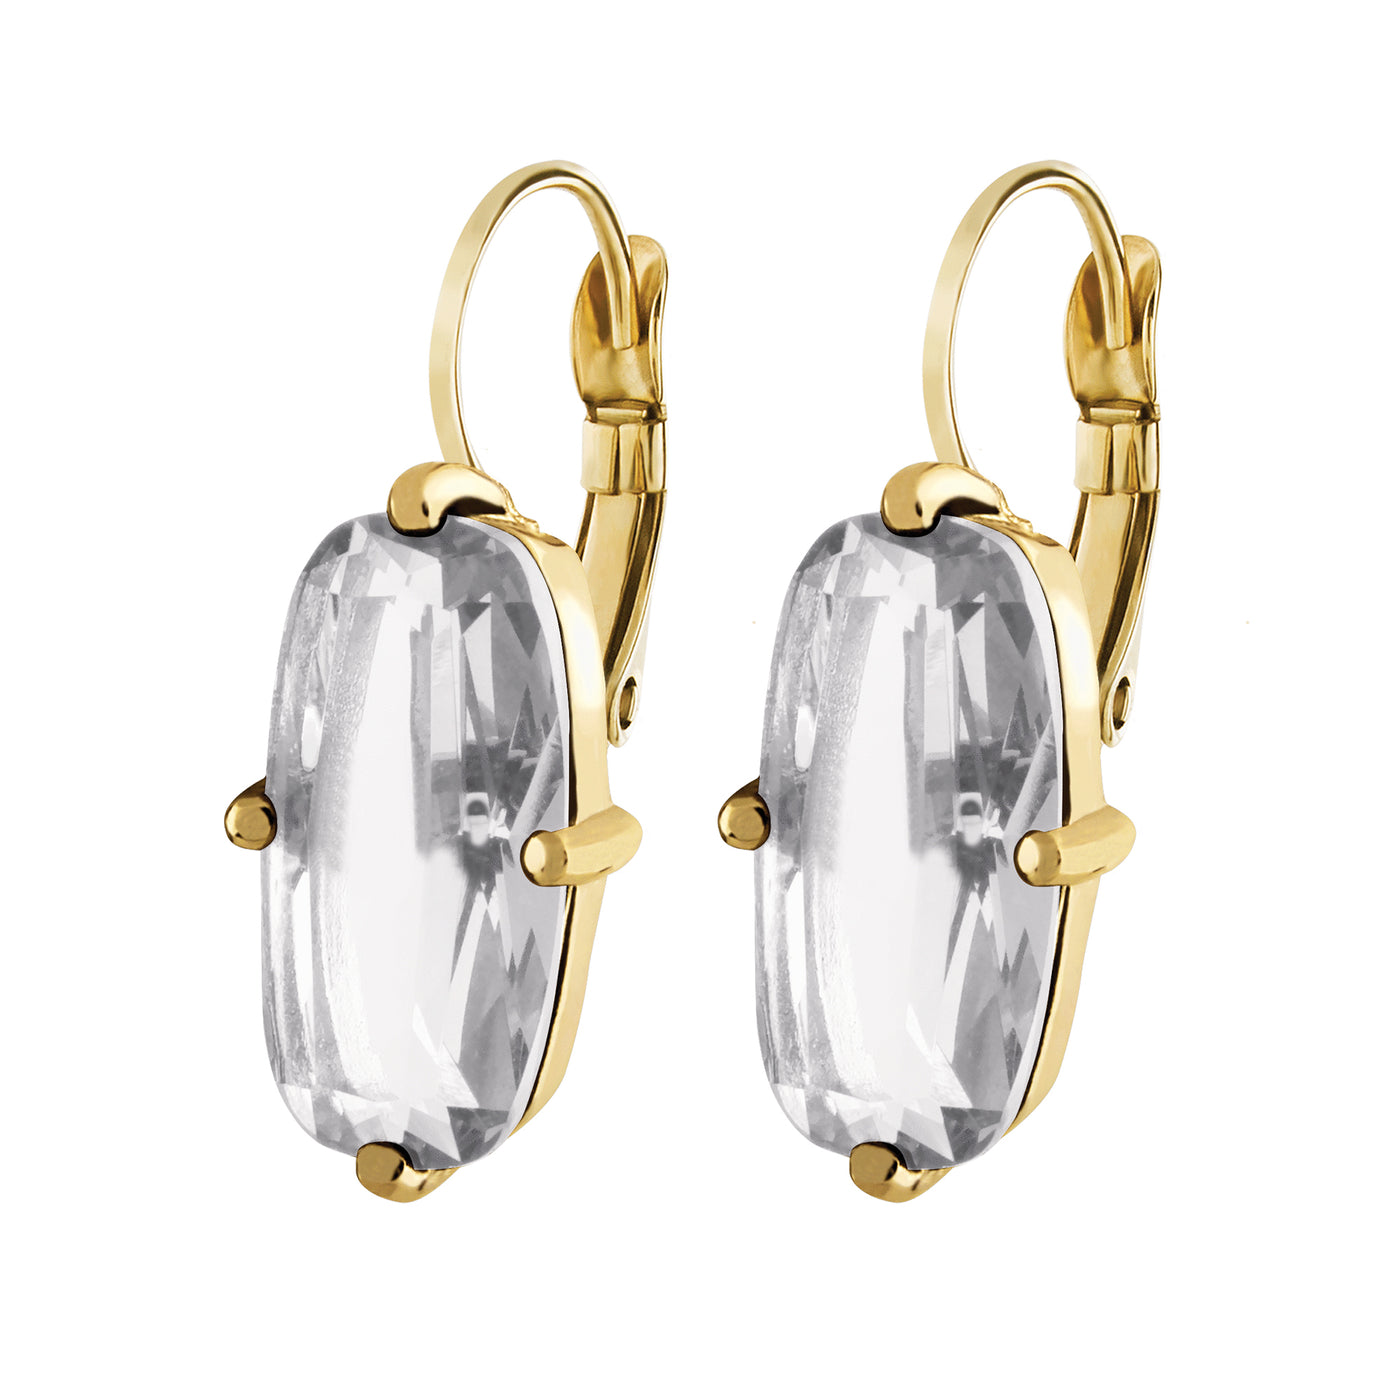 Dyrberg Kern Earrings - Barita Gold with Clear/Rose Crystal